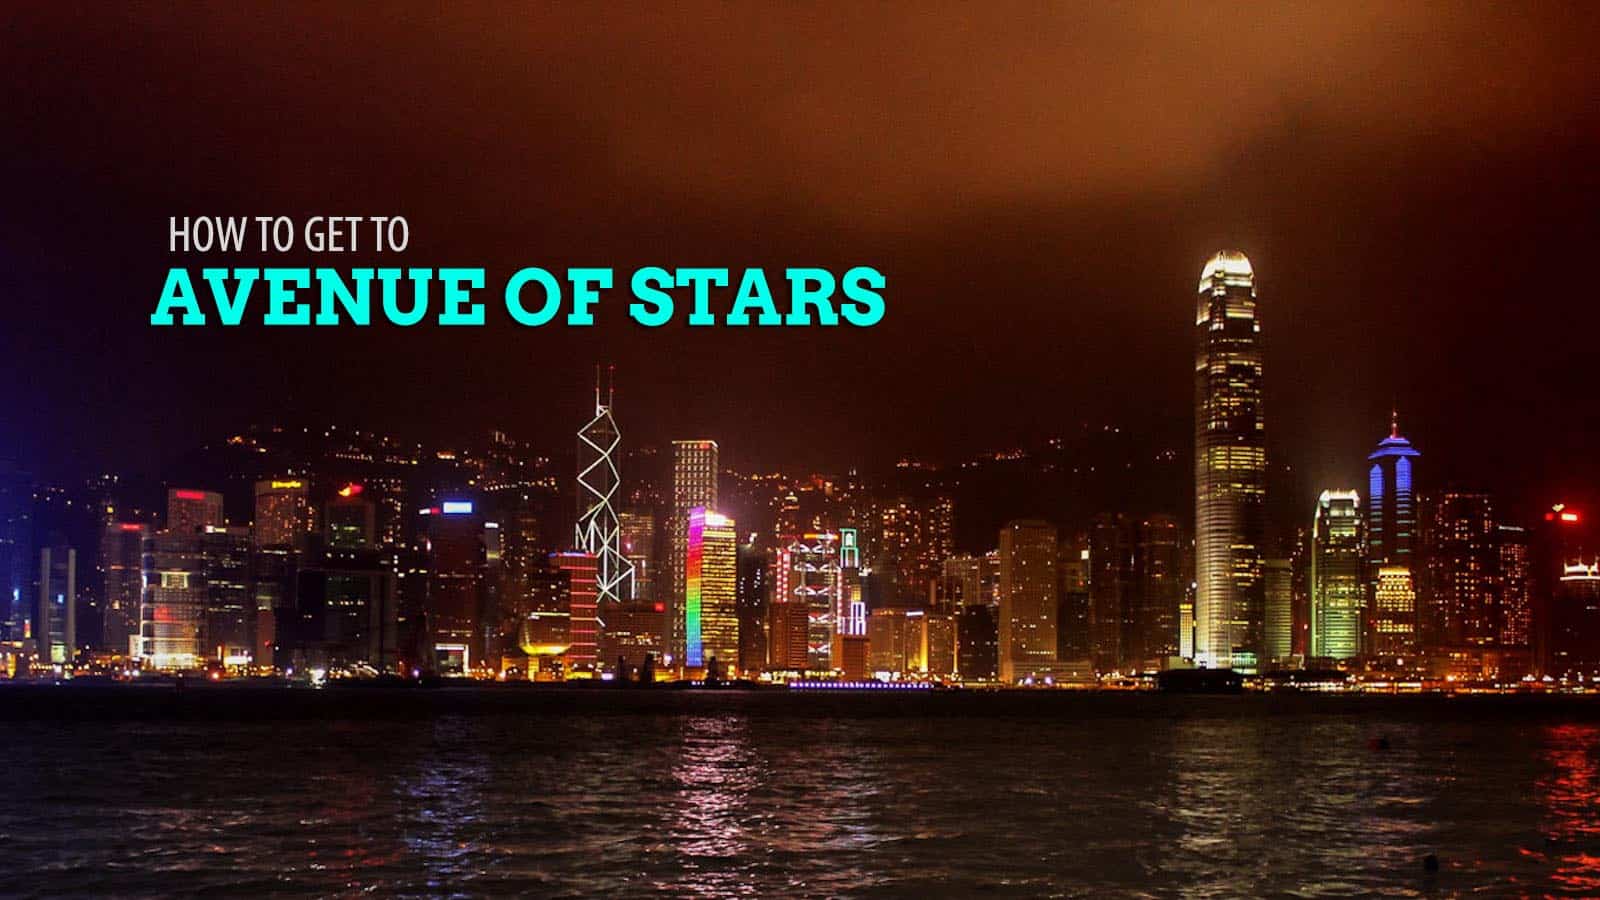 Avenue of Stars MTR